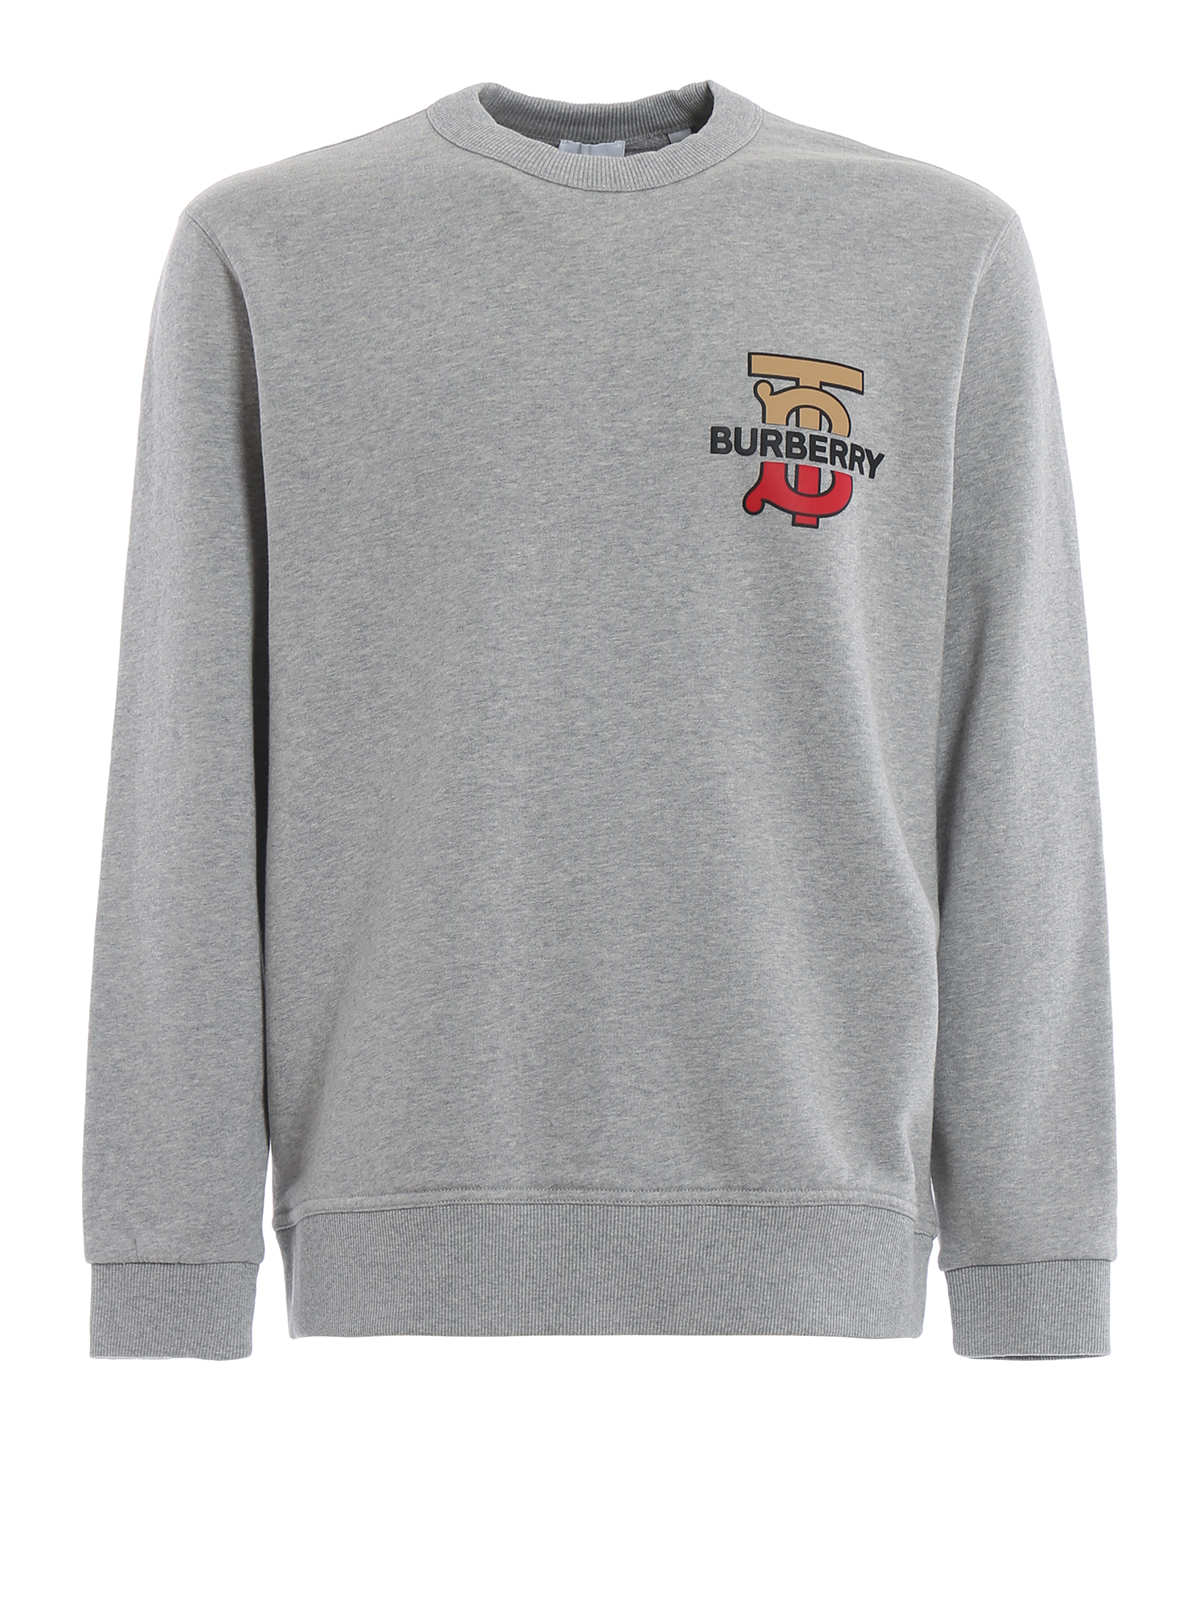 Sweatshirts & Sweaters Burberry - Coldwell grey sweatshirt - 8016676